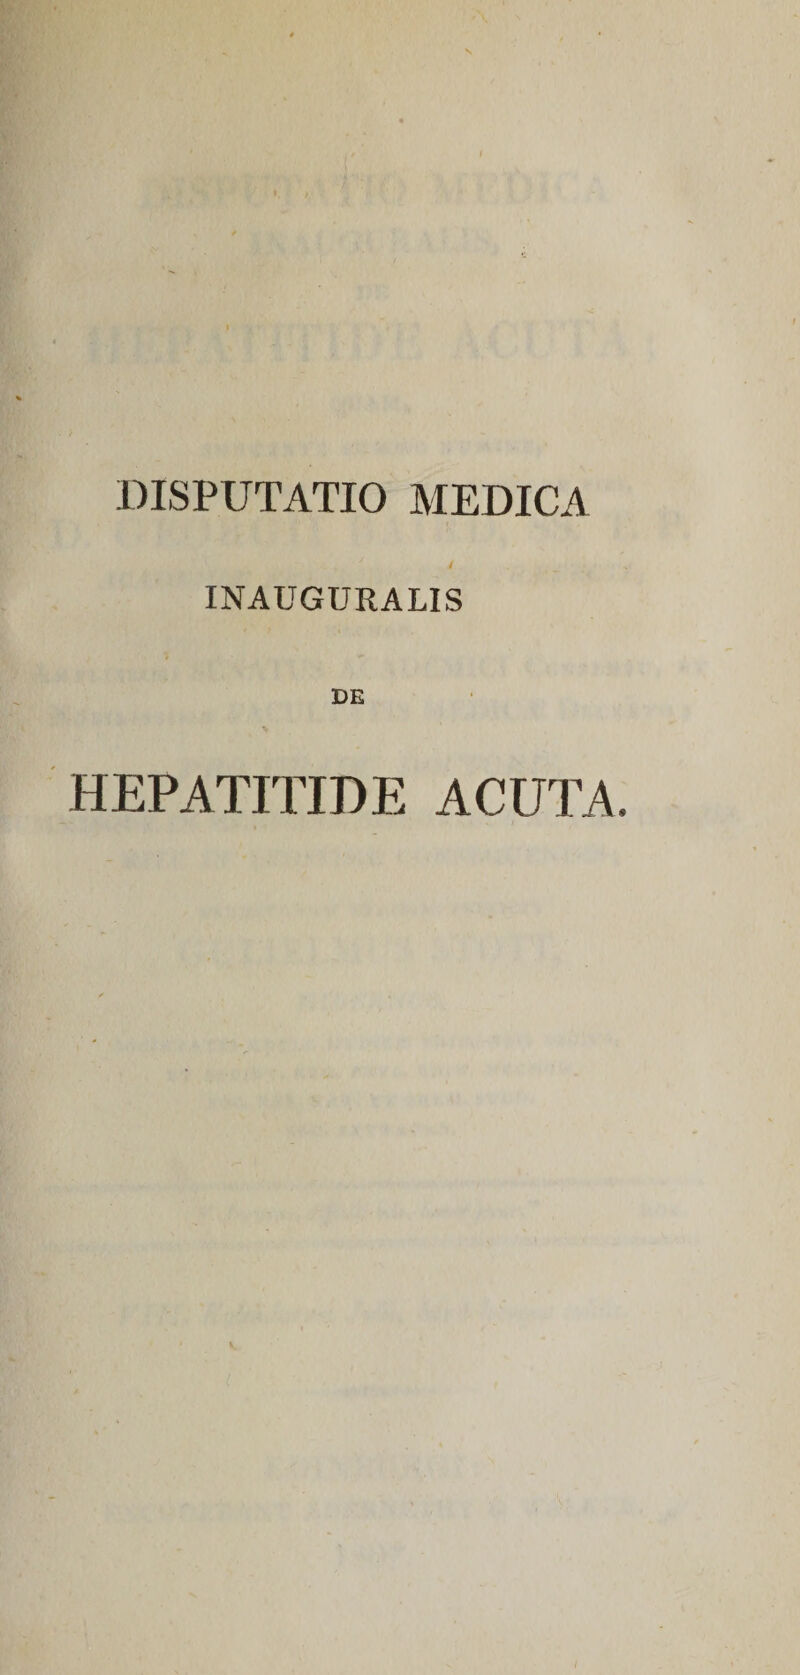 INAUGURALIS DE HEPATITIDE ACUTA.